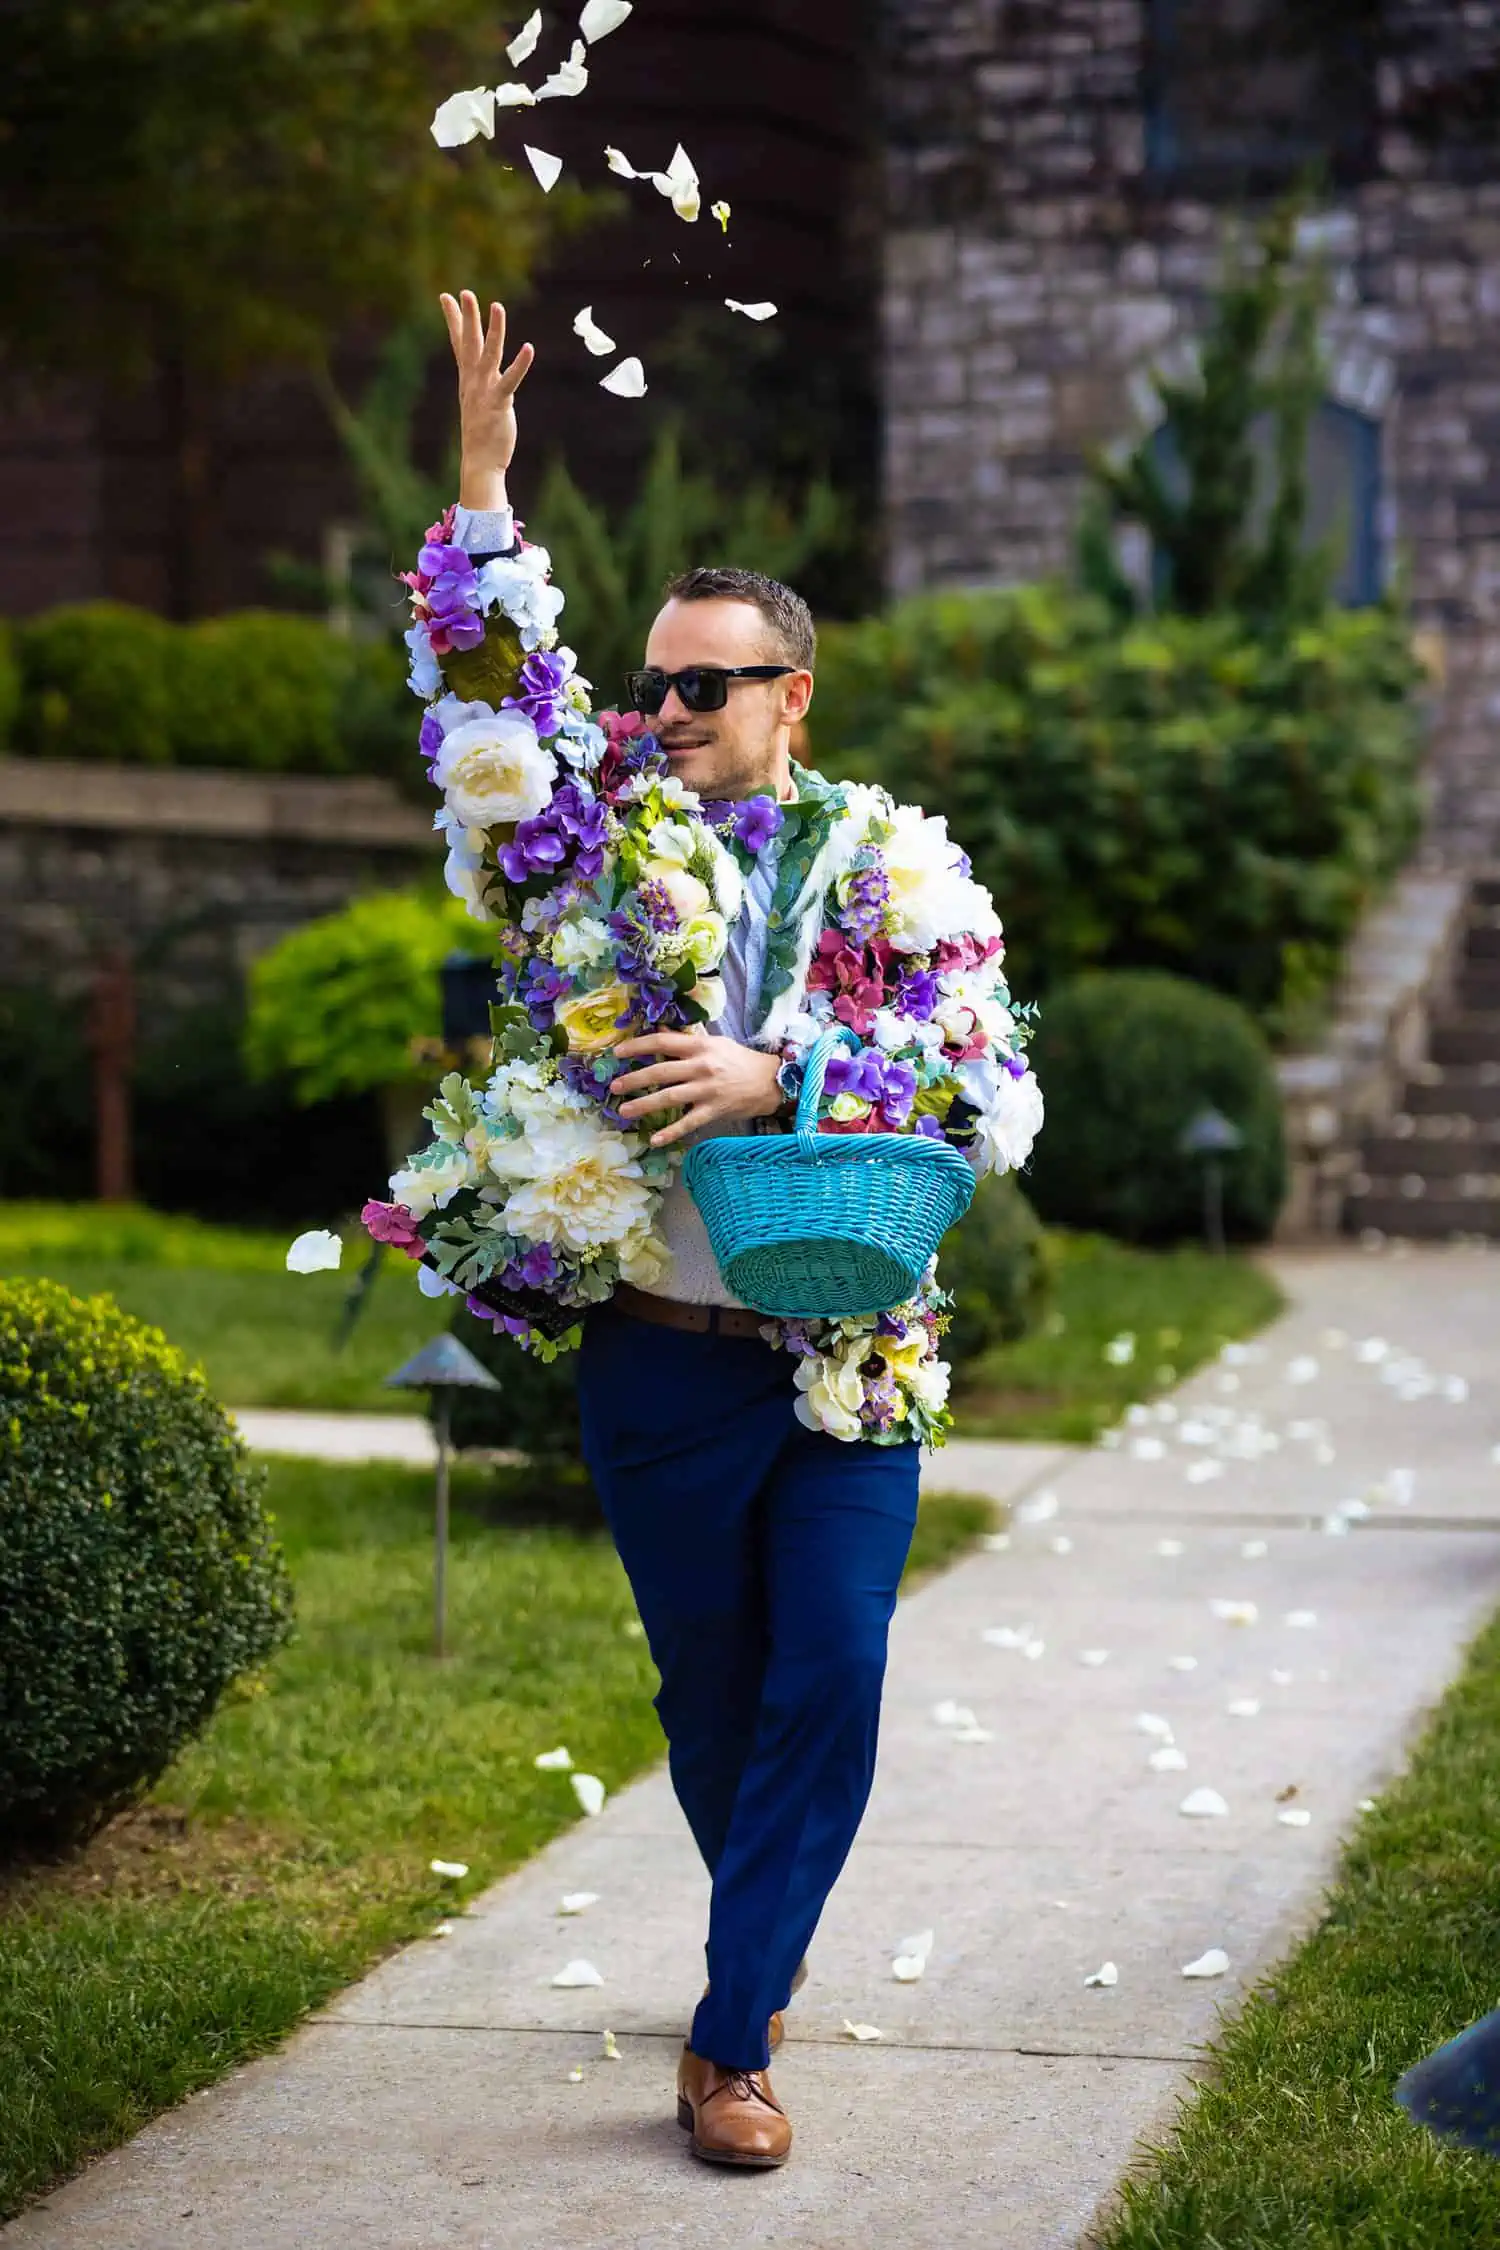 A man with a basket of flowers walking down a sidewalk.